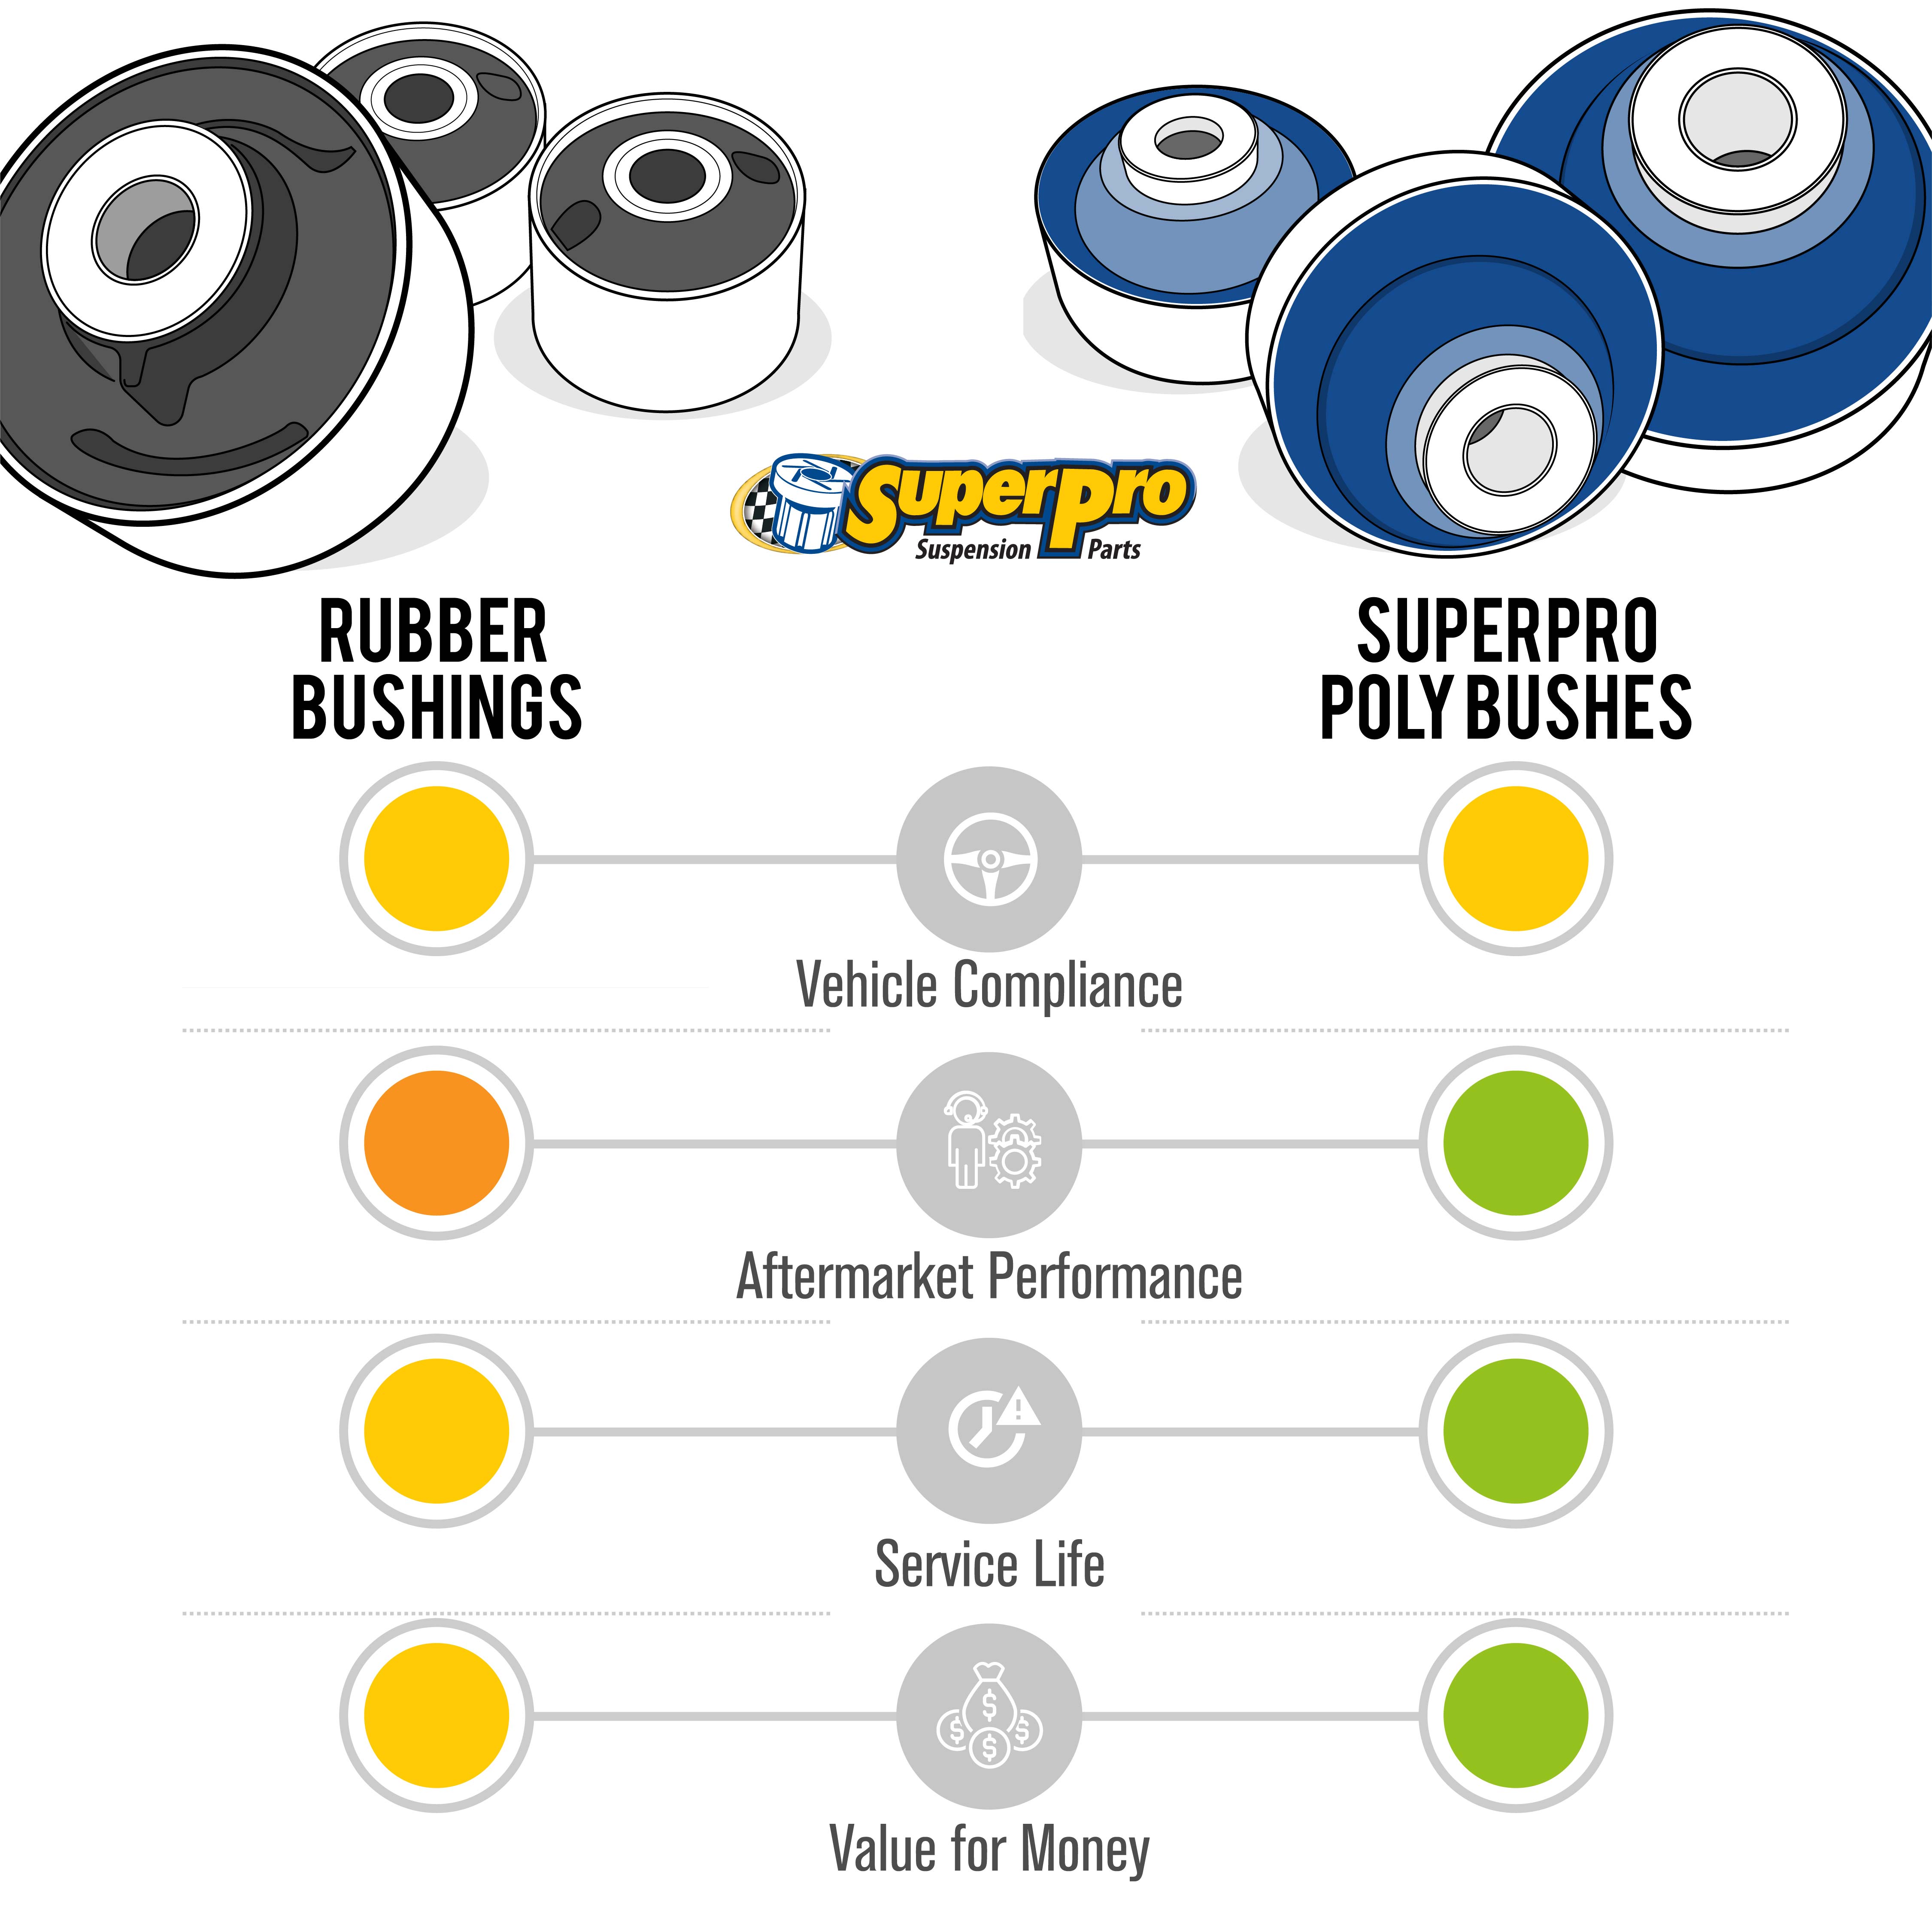 SuperPro Poly Bushings vs Rubber Bushings Info Graphic 1